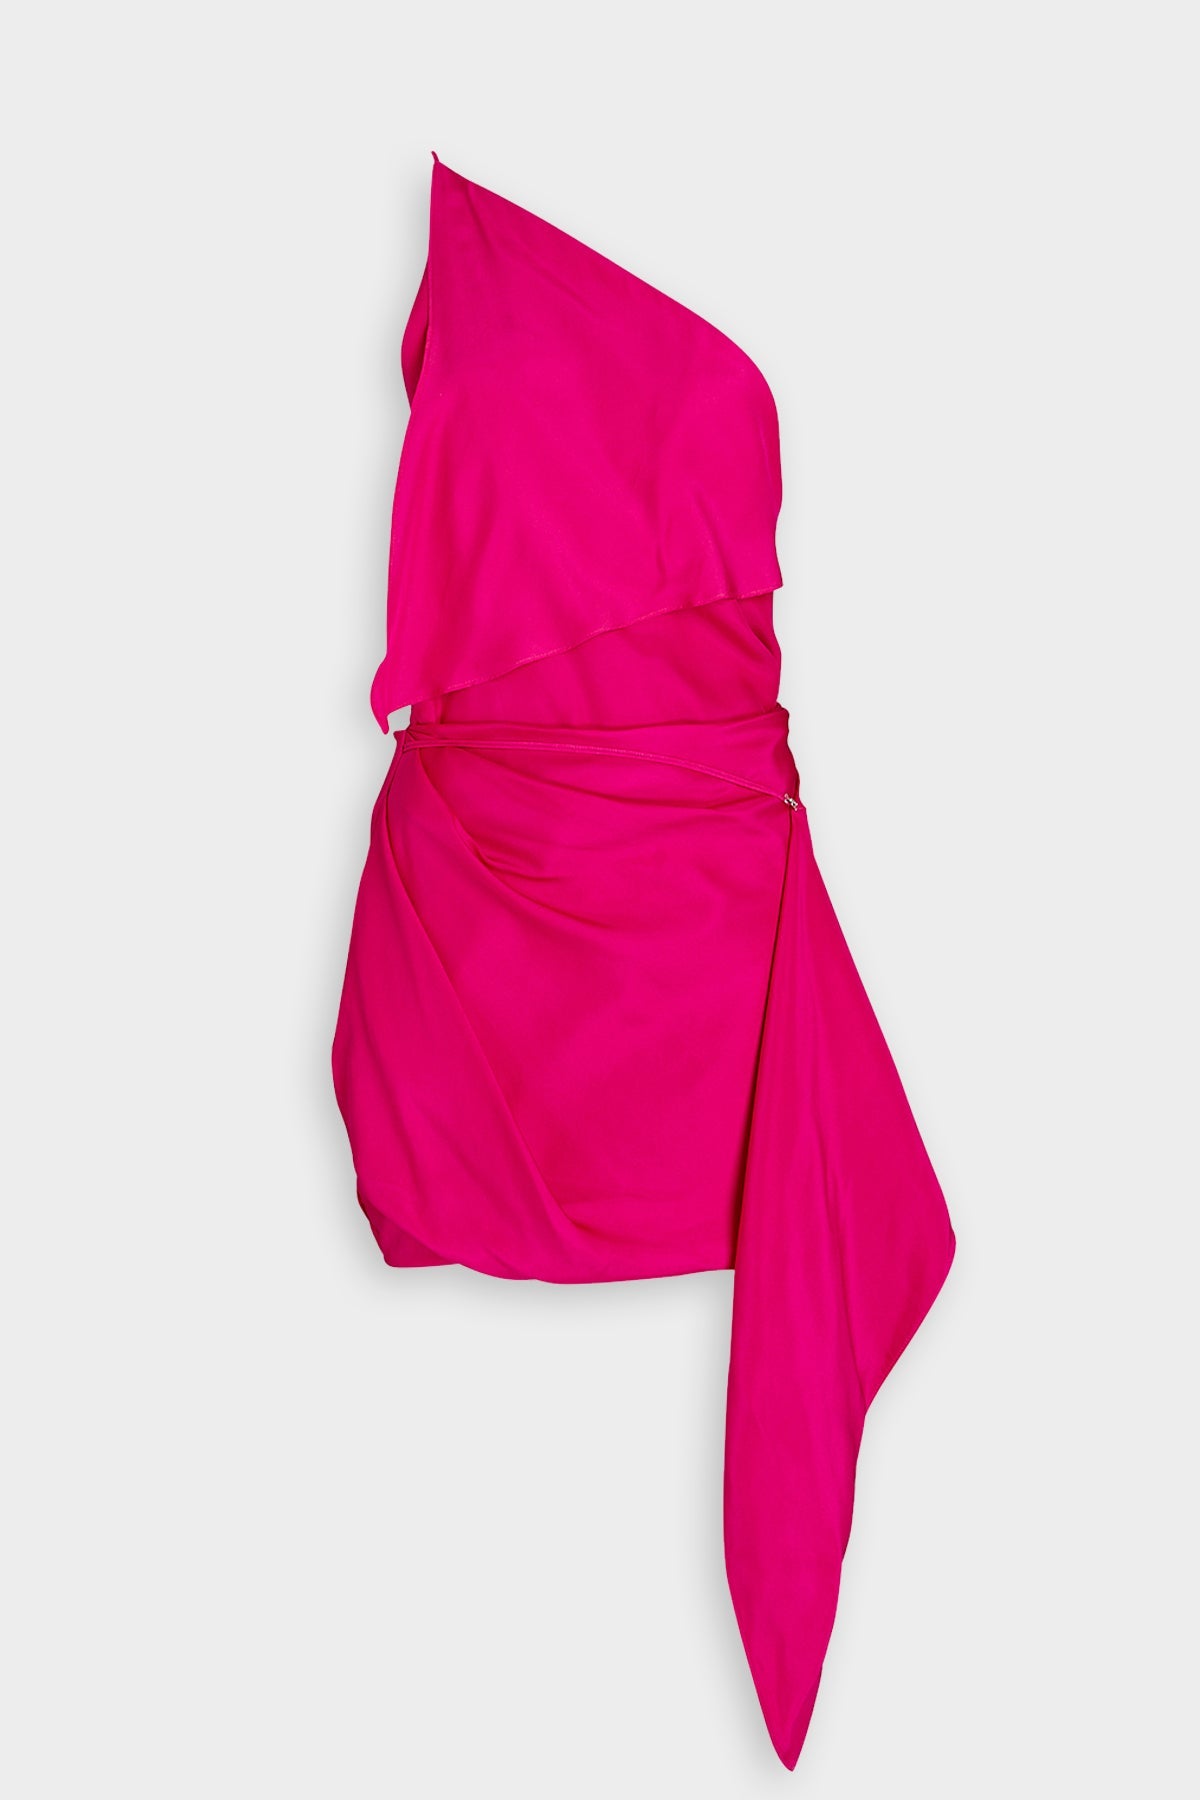 Hida Mini Dress in Cherry Pink - shop-olivia.com